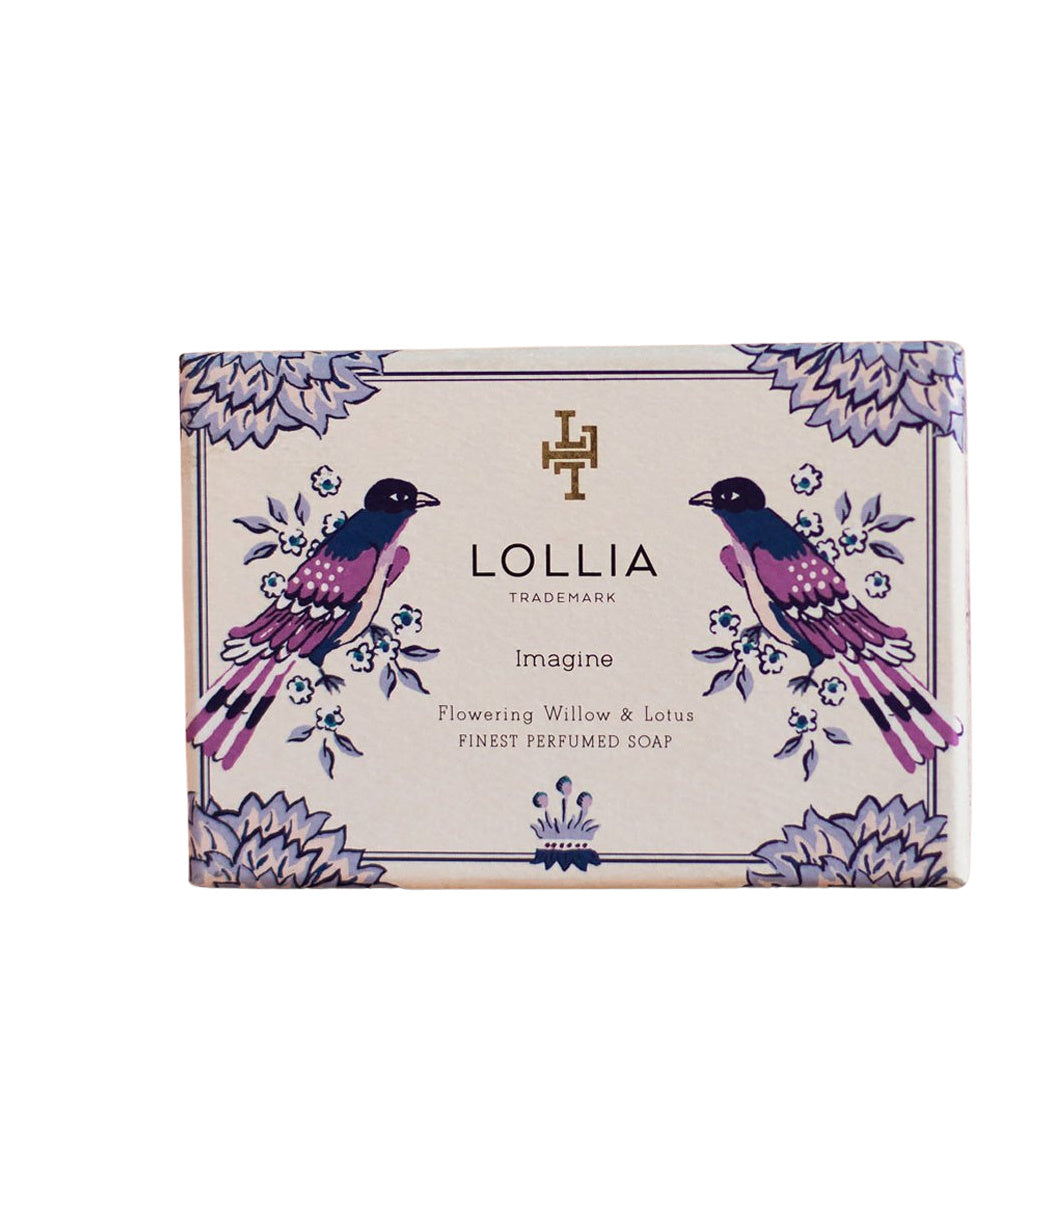 Lollia Imagine Shea Butter Soap